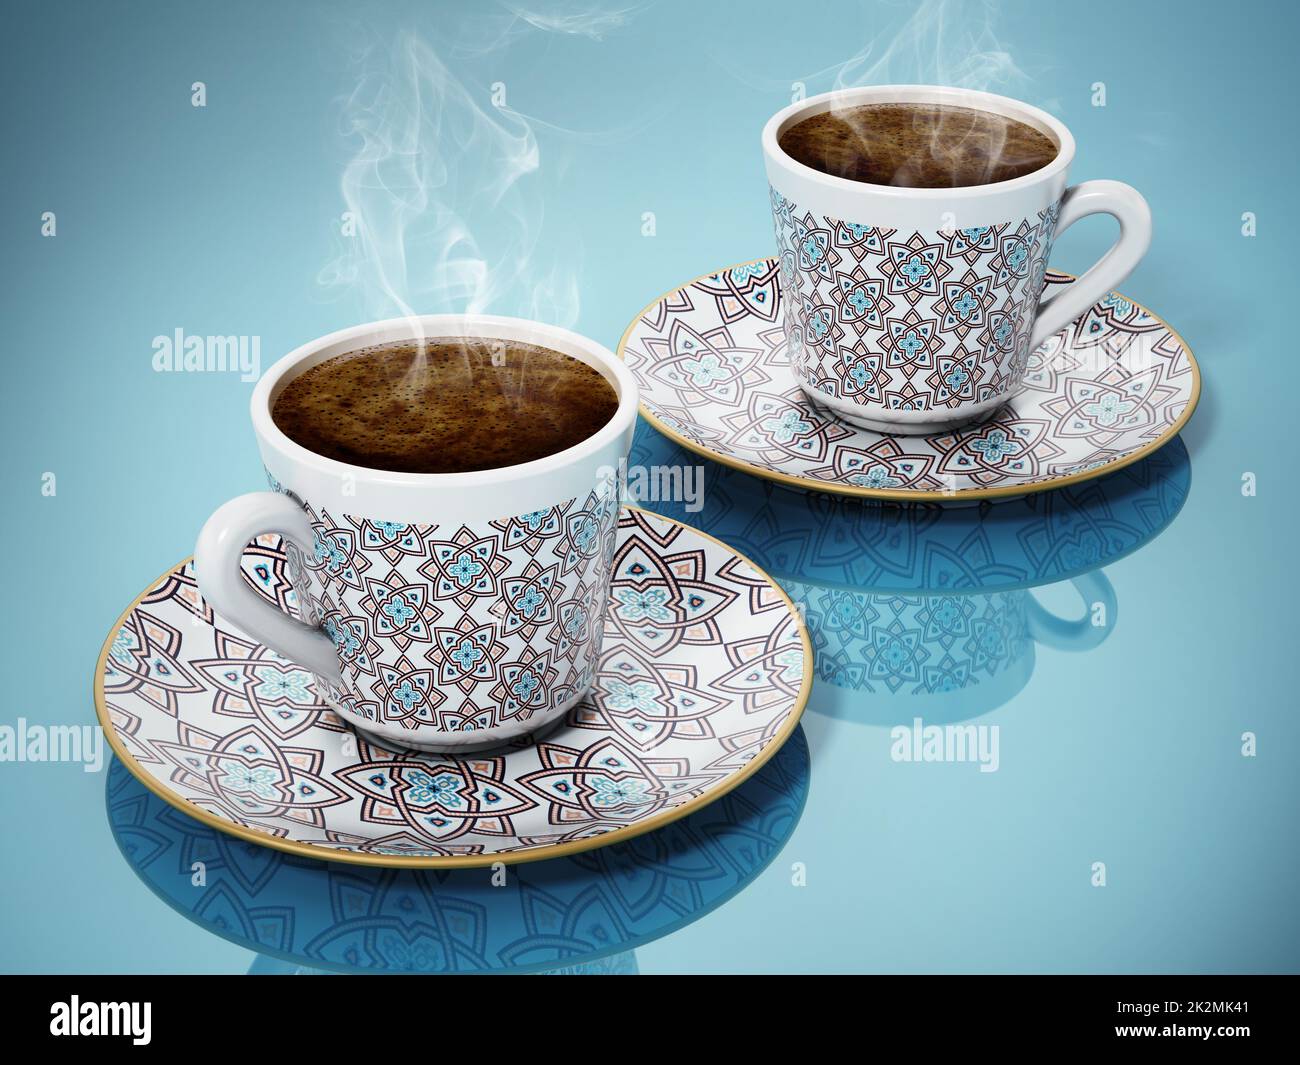 https://c8.alamy.com/compes/2k2mk41/el-cafe-turco-se-sirve-en-tazas-de-porcelana-aisladas-sobre-fondo-blanco-ilustracion-3d-2k2mk41.jpg